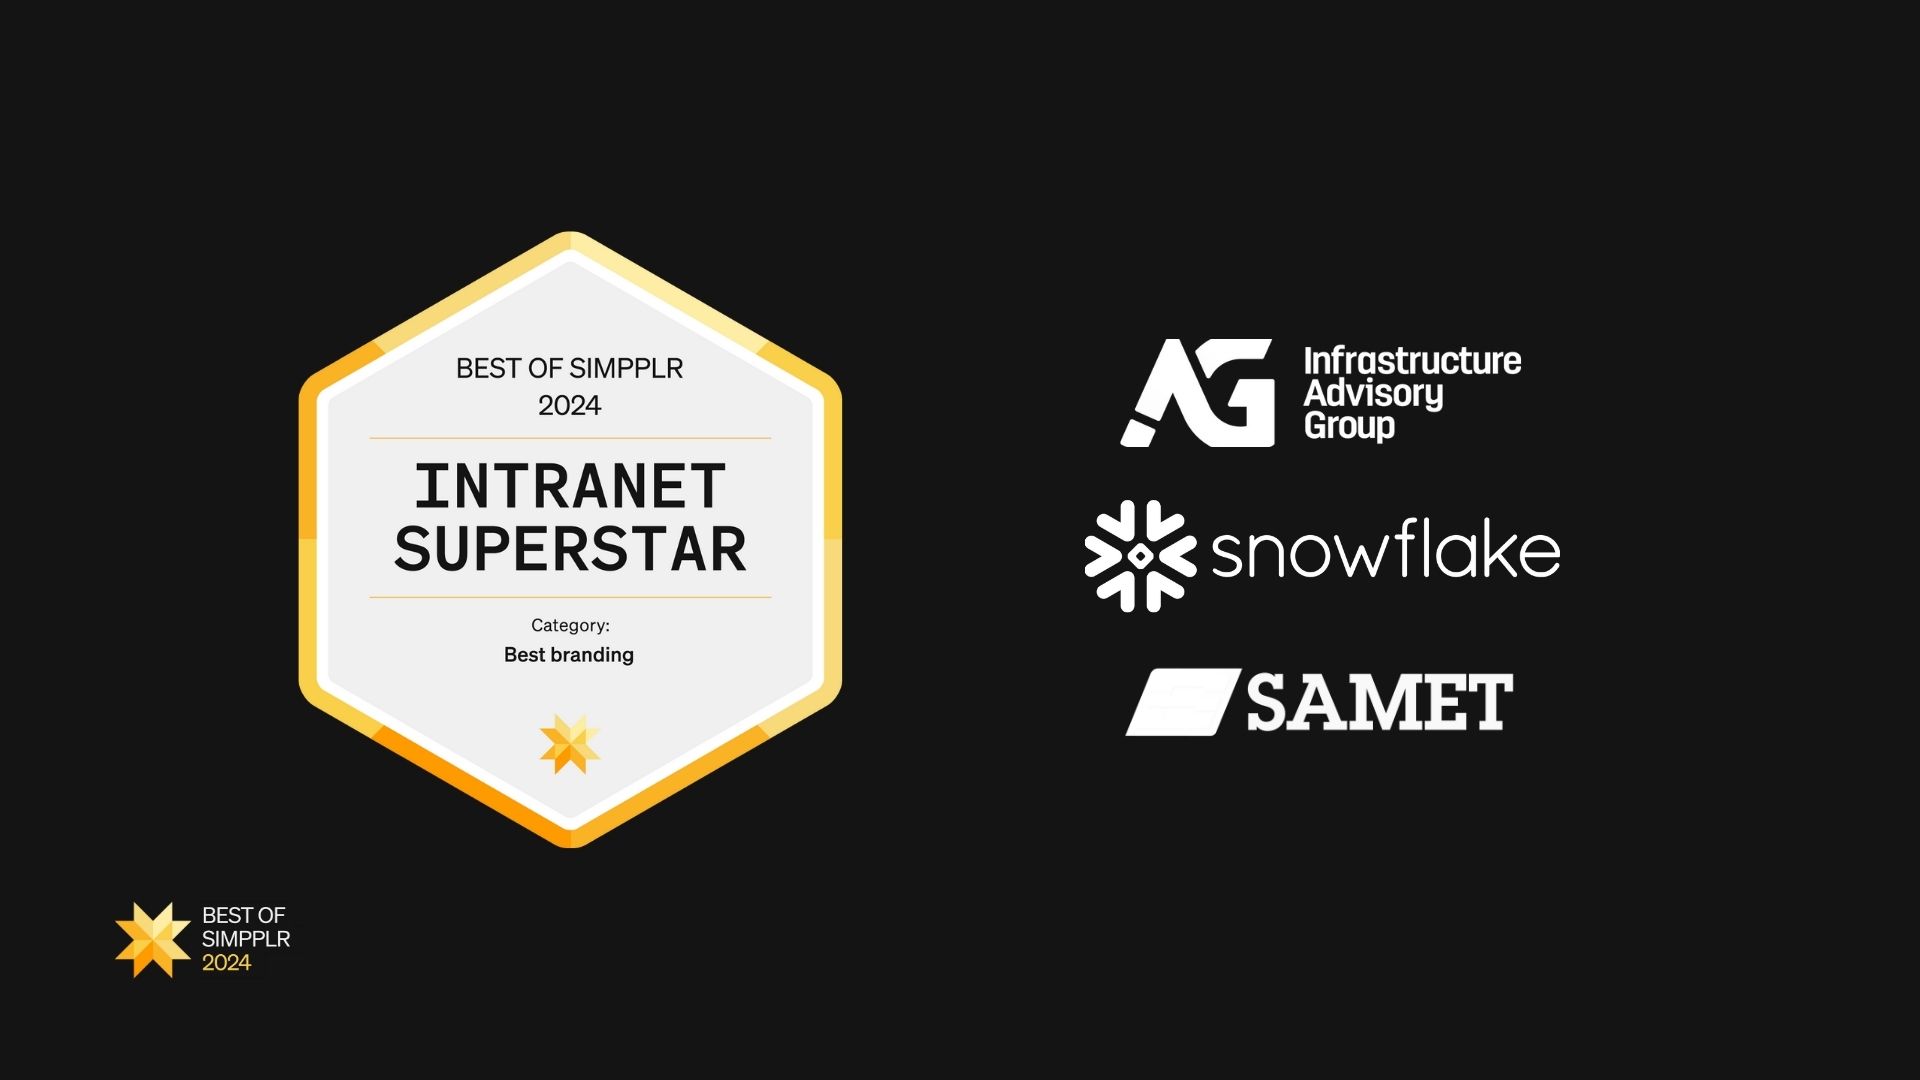 Best of Simpplr 2024 intranet contest winners - Best branding: Snowflake, Samet Corporation, Infrastructure Advisory Group